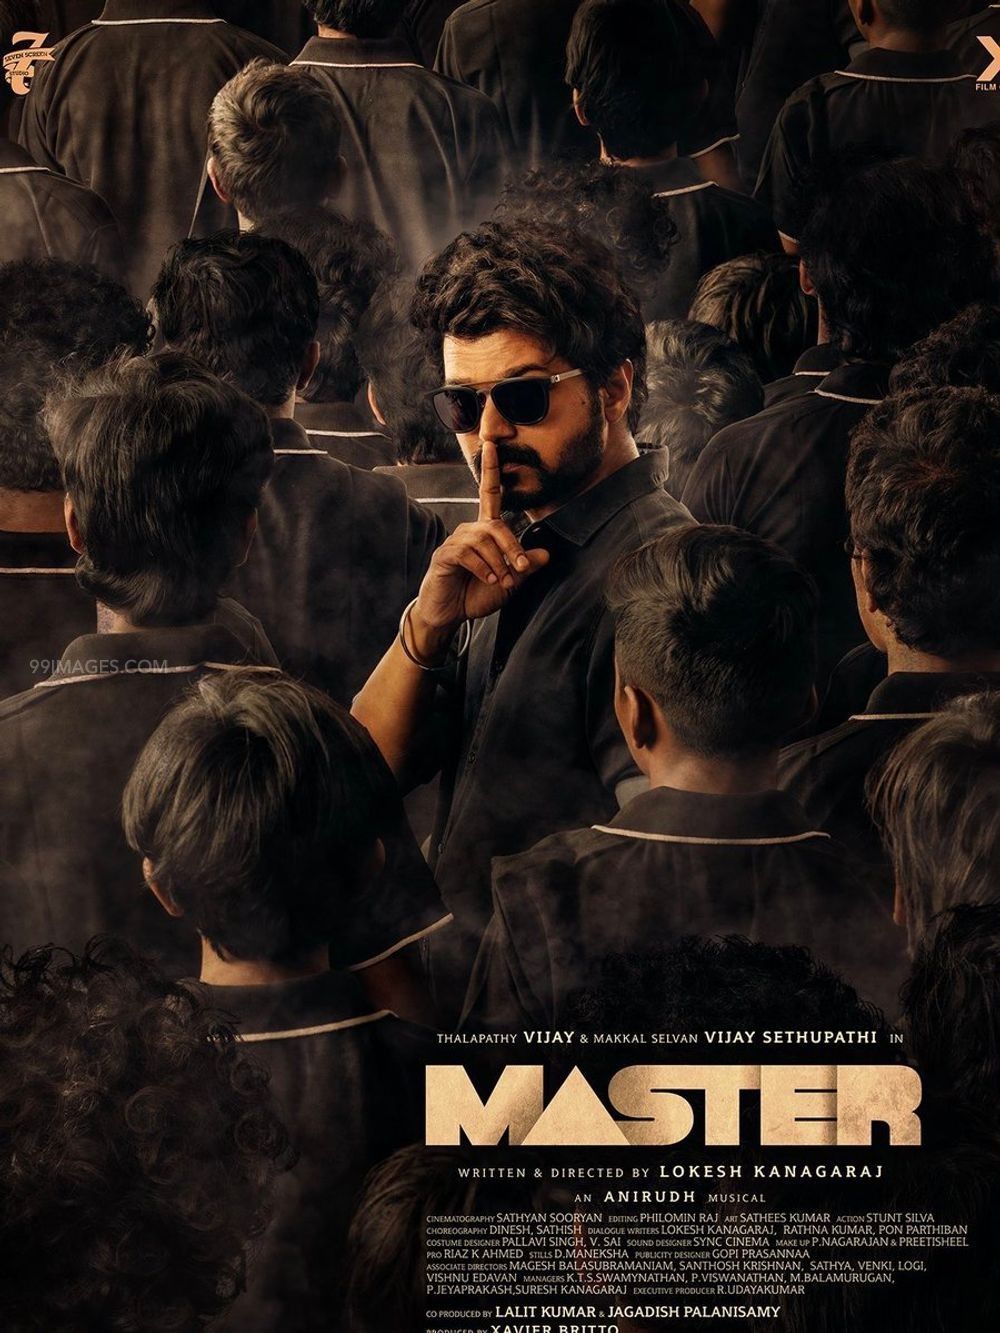 Master Movie Latest HD Photo / Stills, Posters & Wallpaper Download (1080p, 4K) #master #vijay #vijayhd #k. Up the movie, Movie ringtones, Movie stars